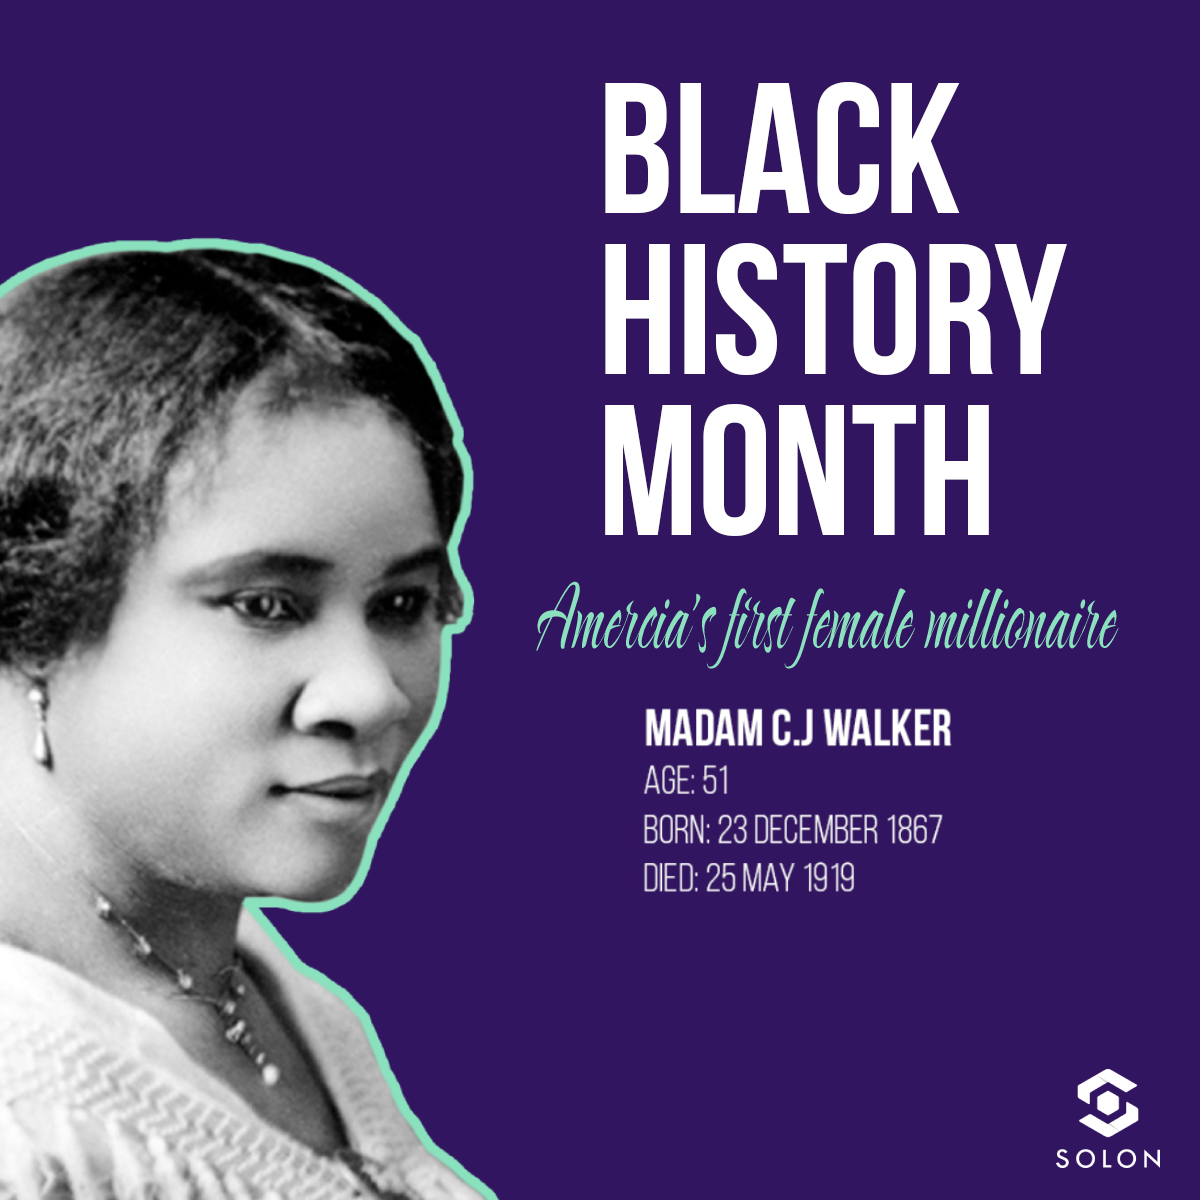 Celebrating Black History Month & Legacy